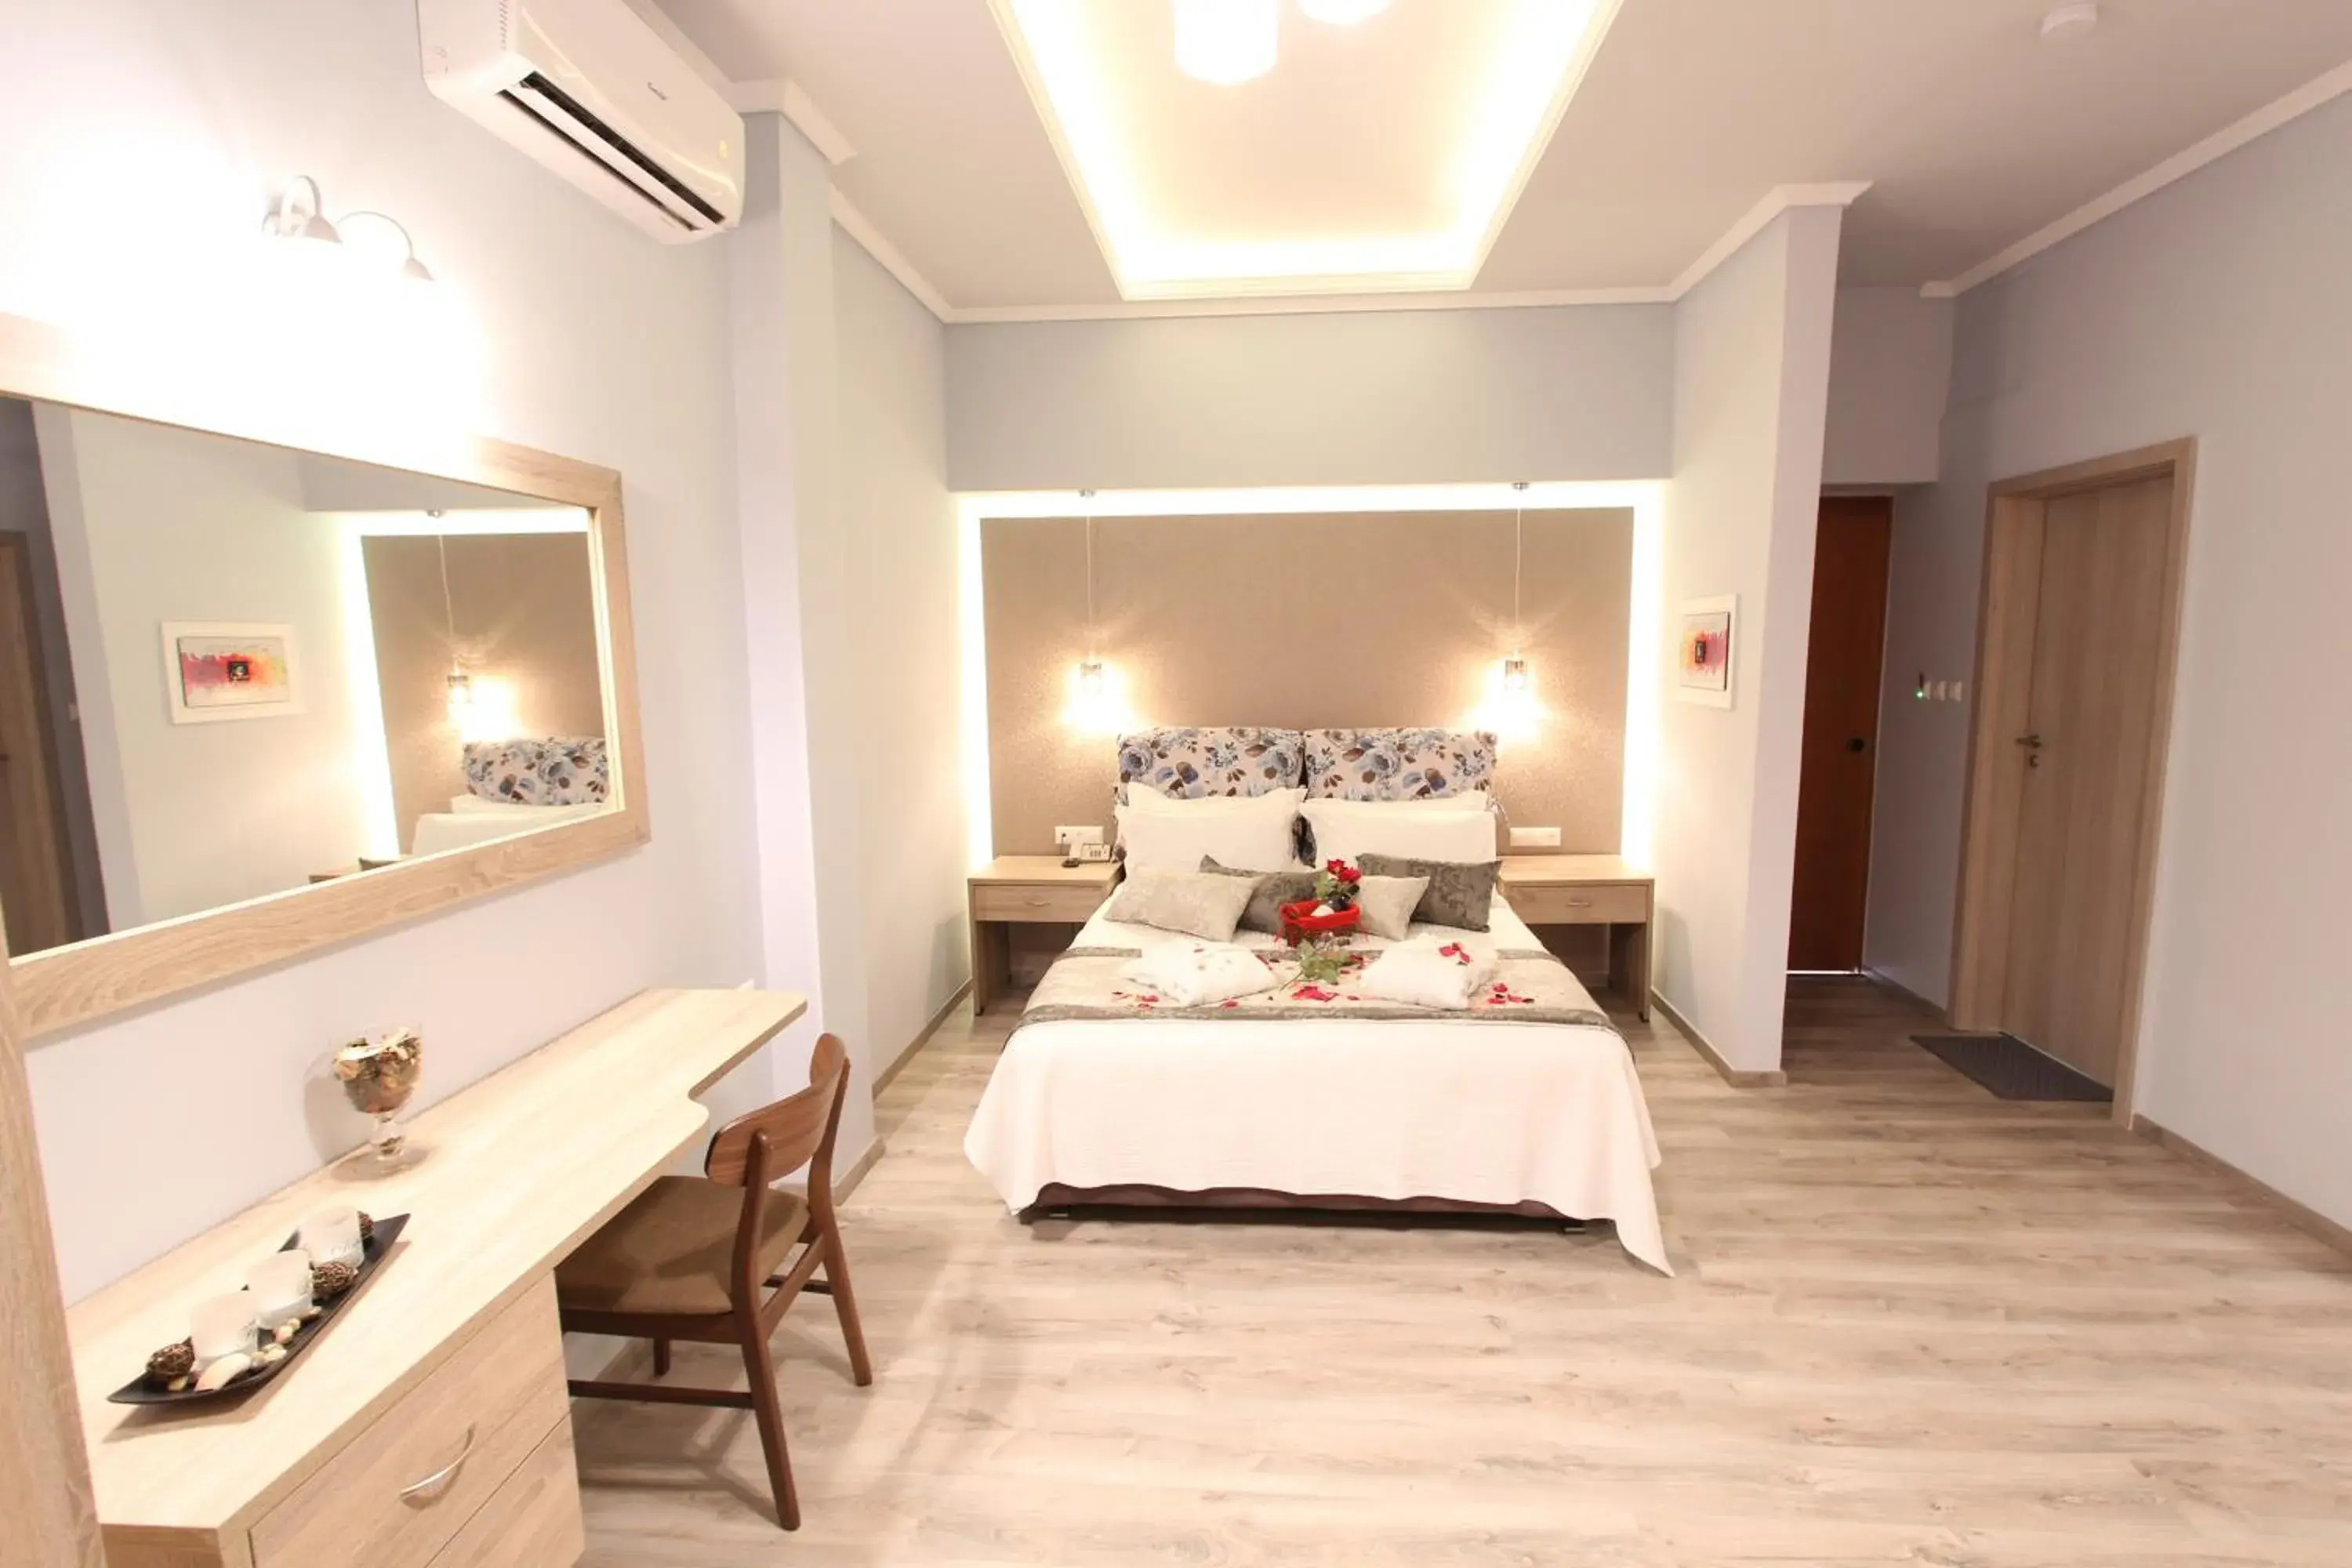 Bed, Room Photo in Hotel Mallas